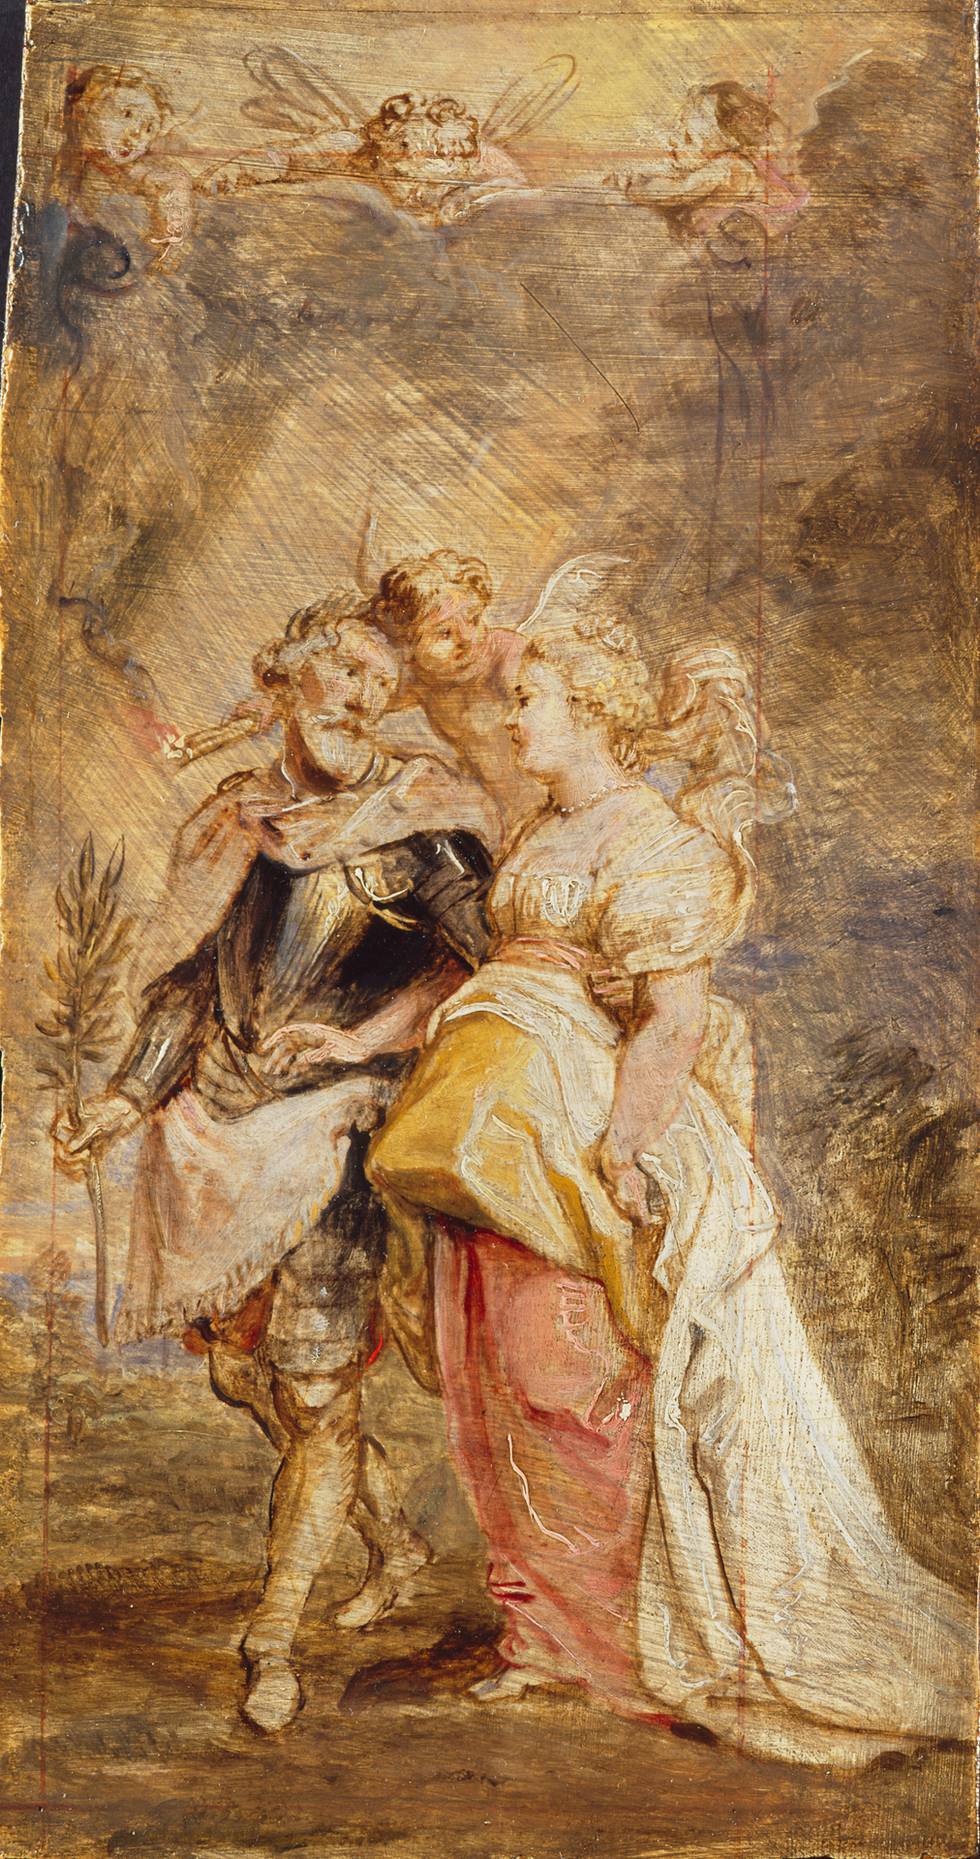 An oil sketch showing the union of Henri IV and Marie de Médicis